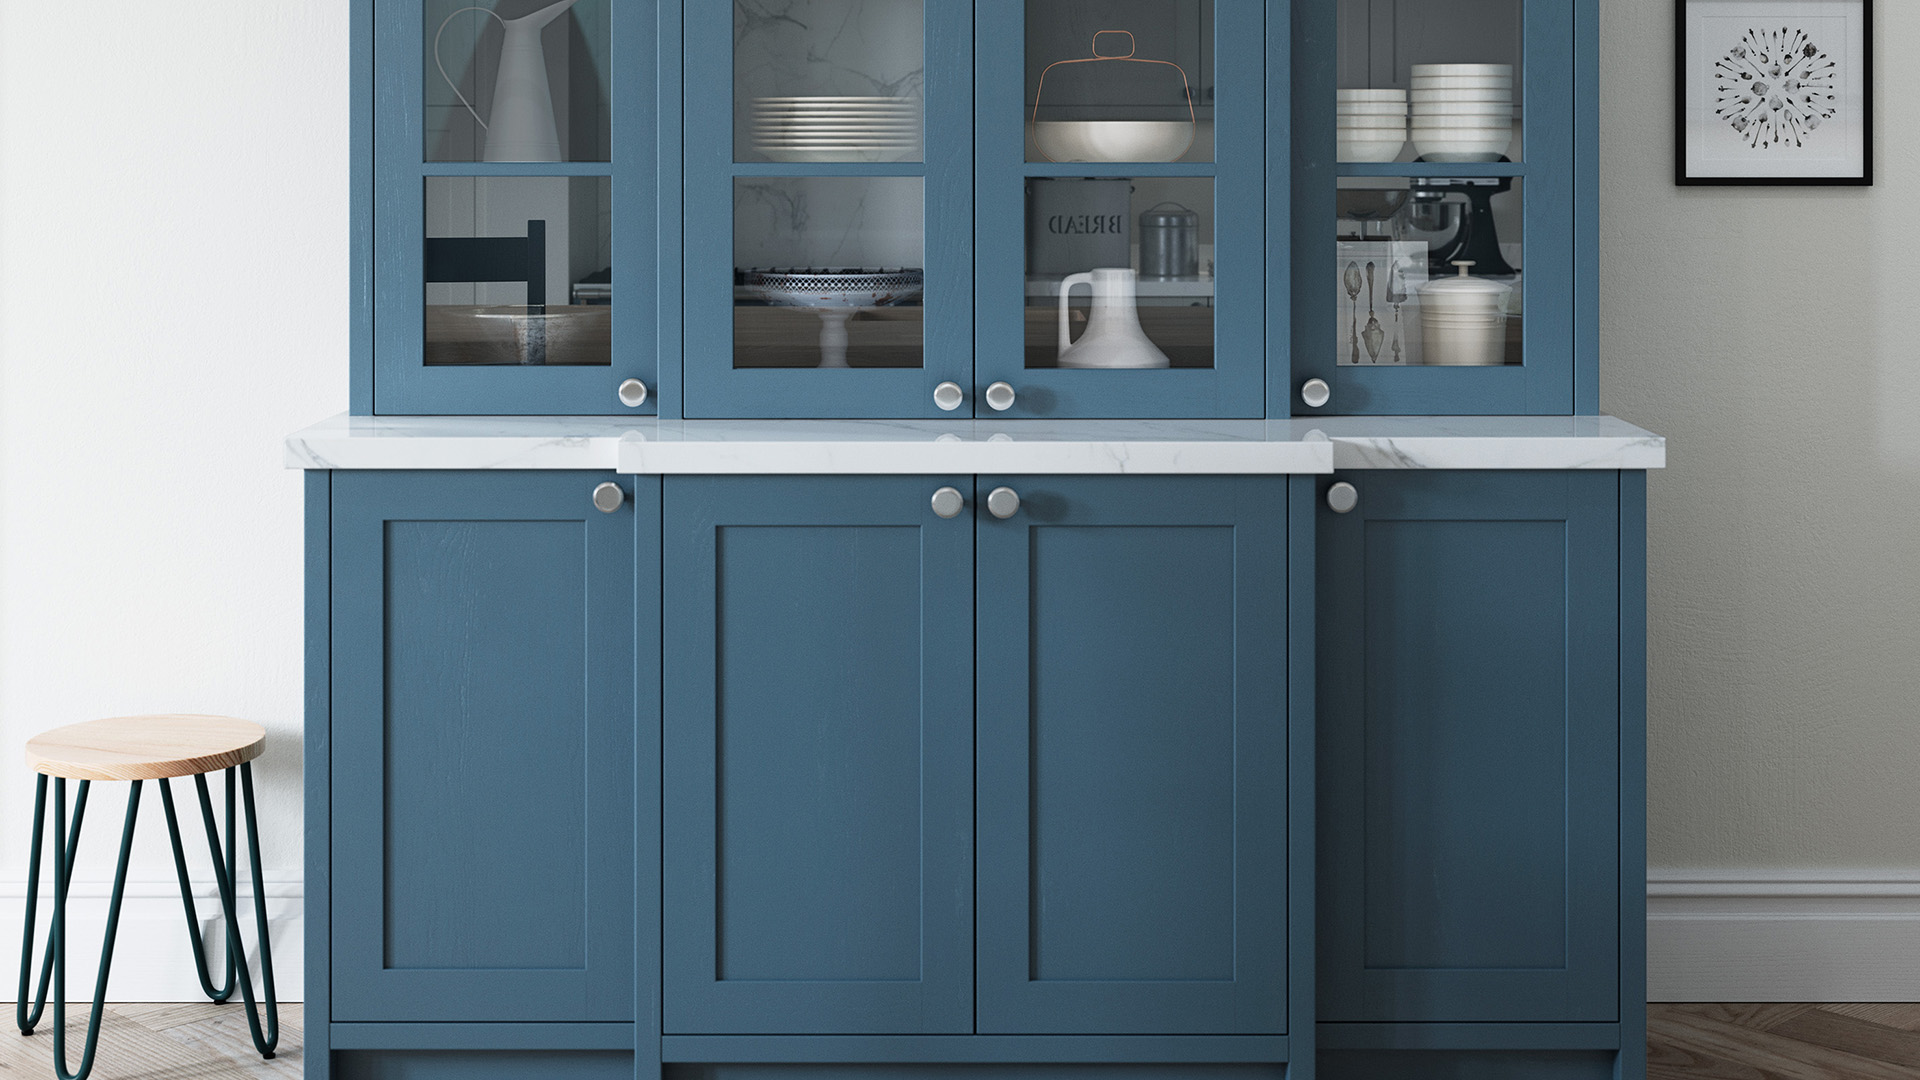 Aldana Solid Wood Airforce kitchens showing off artisanal craftsmanship in a distinguished airforce blue